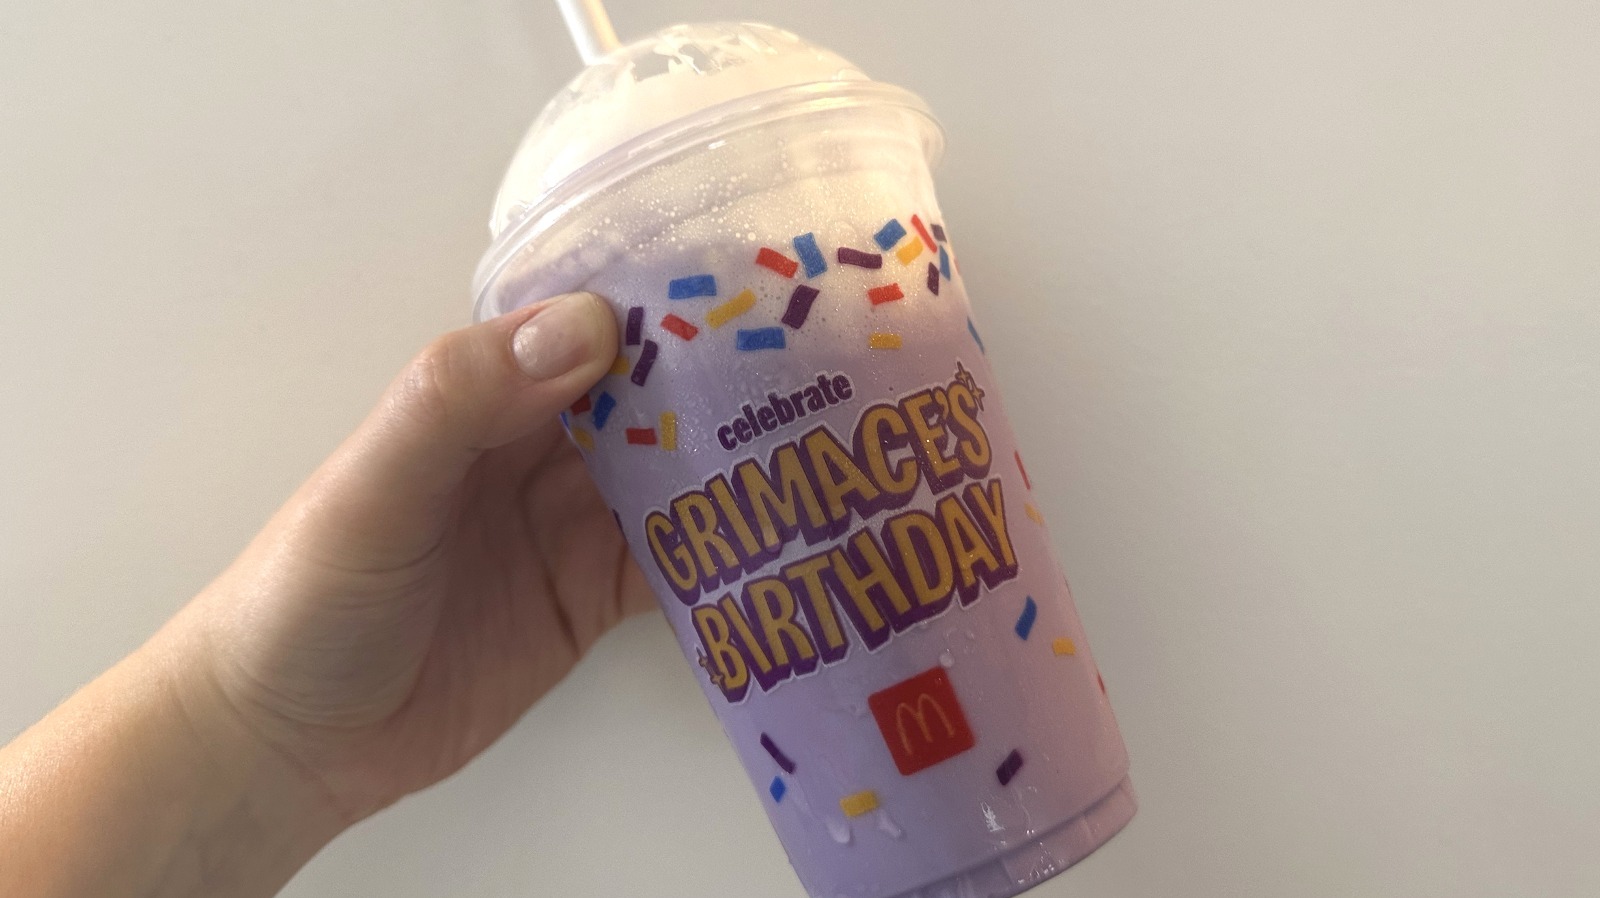 Rating of the McDonald's grimace birthday milkshake